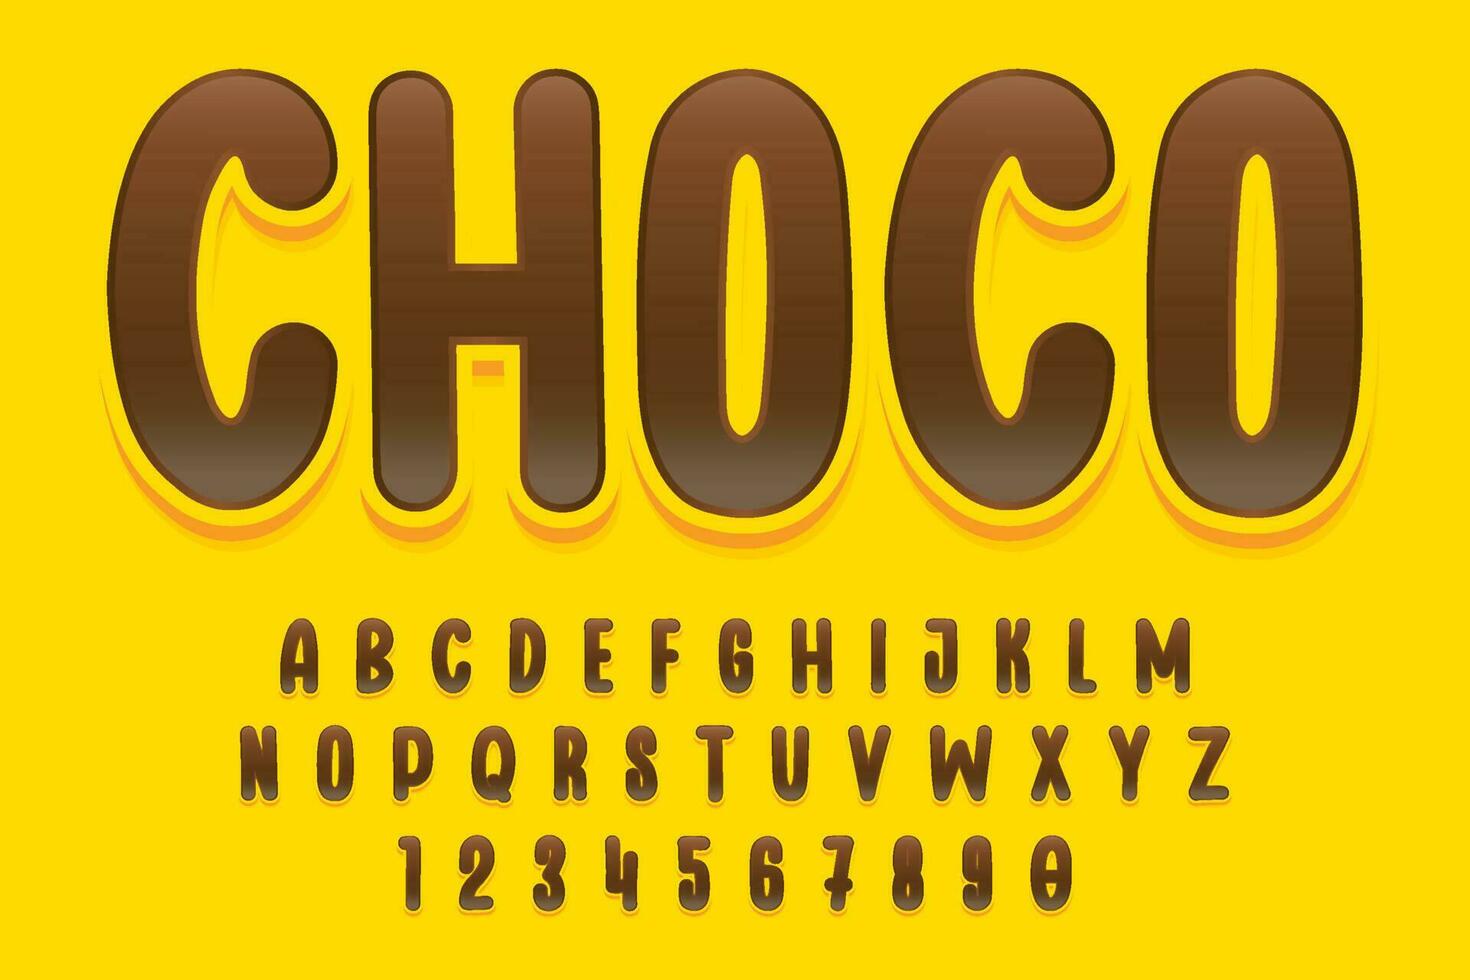 decorative choco editable text effect vector design